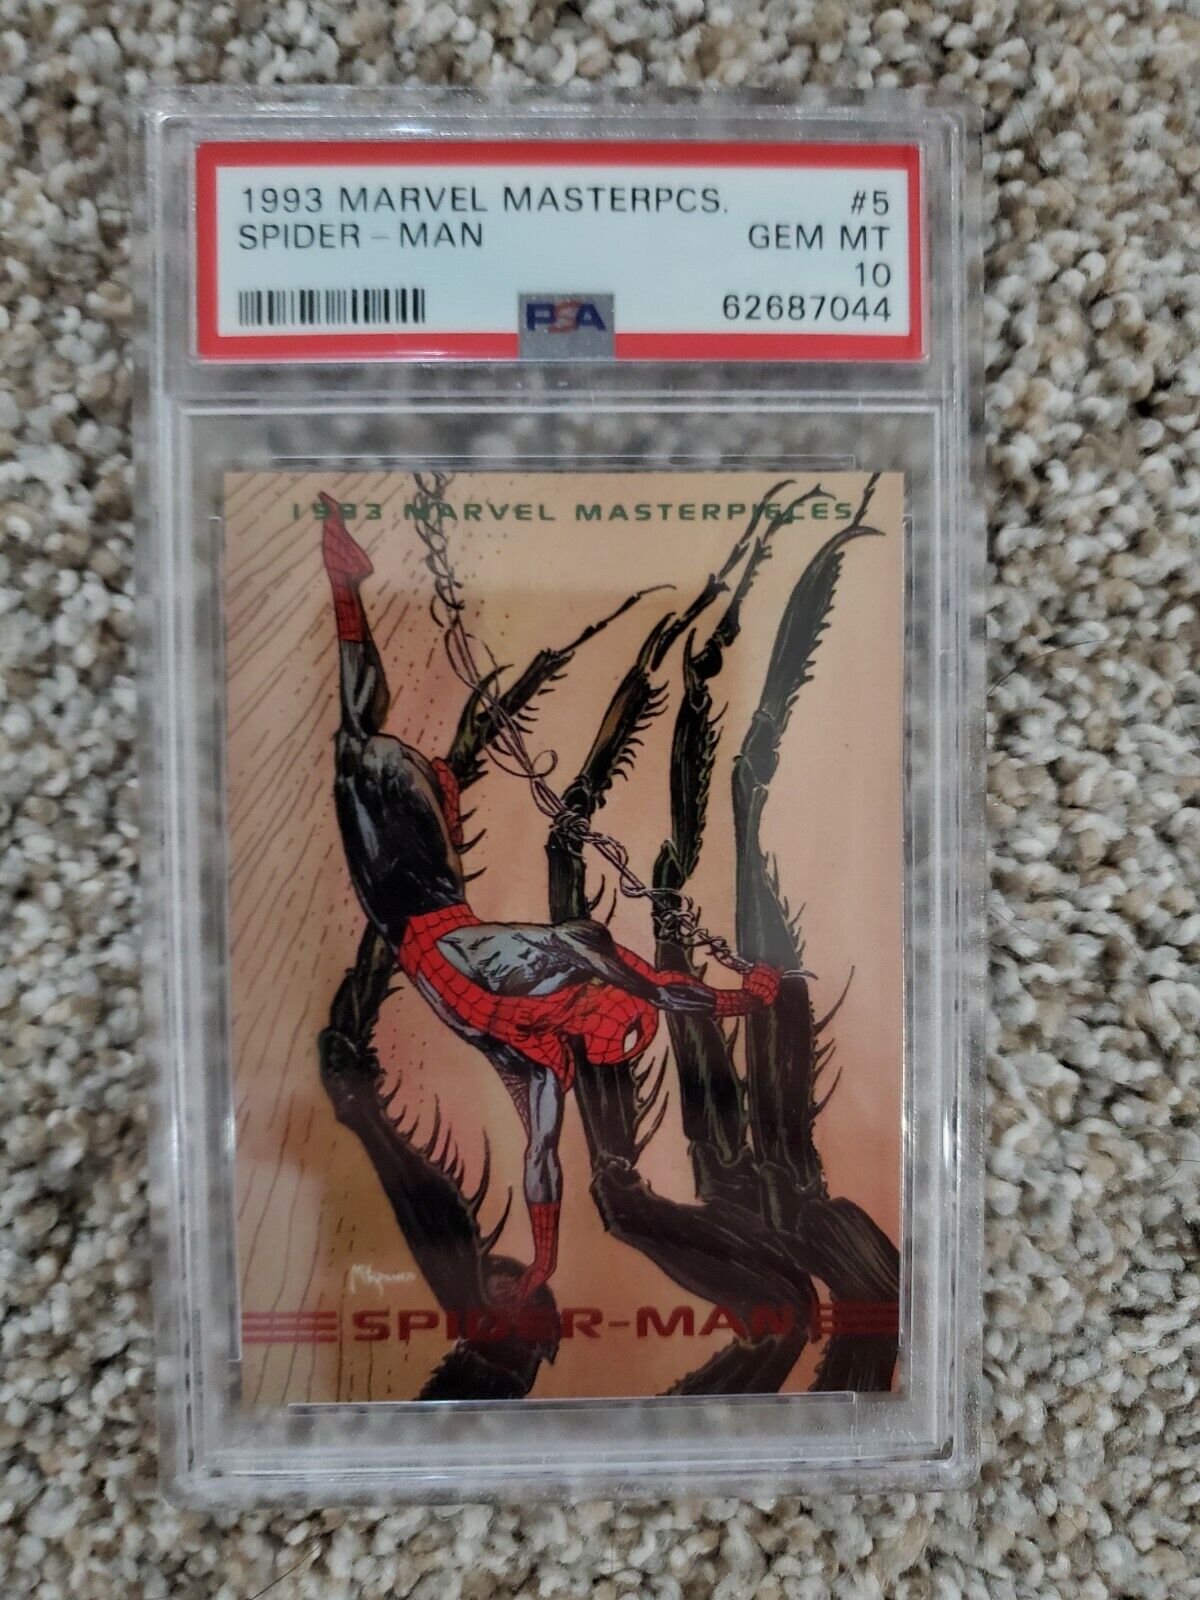 1993 Marvel Masterpieces Spider-man PSA 10 Gem Mint #5 with photo